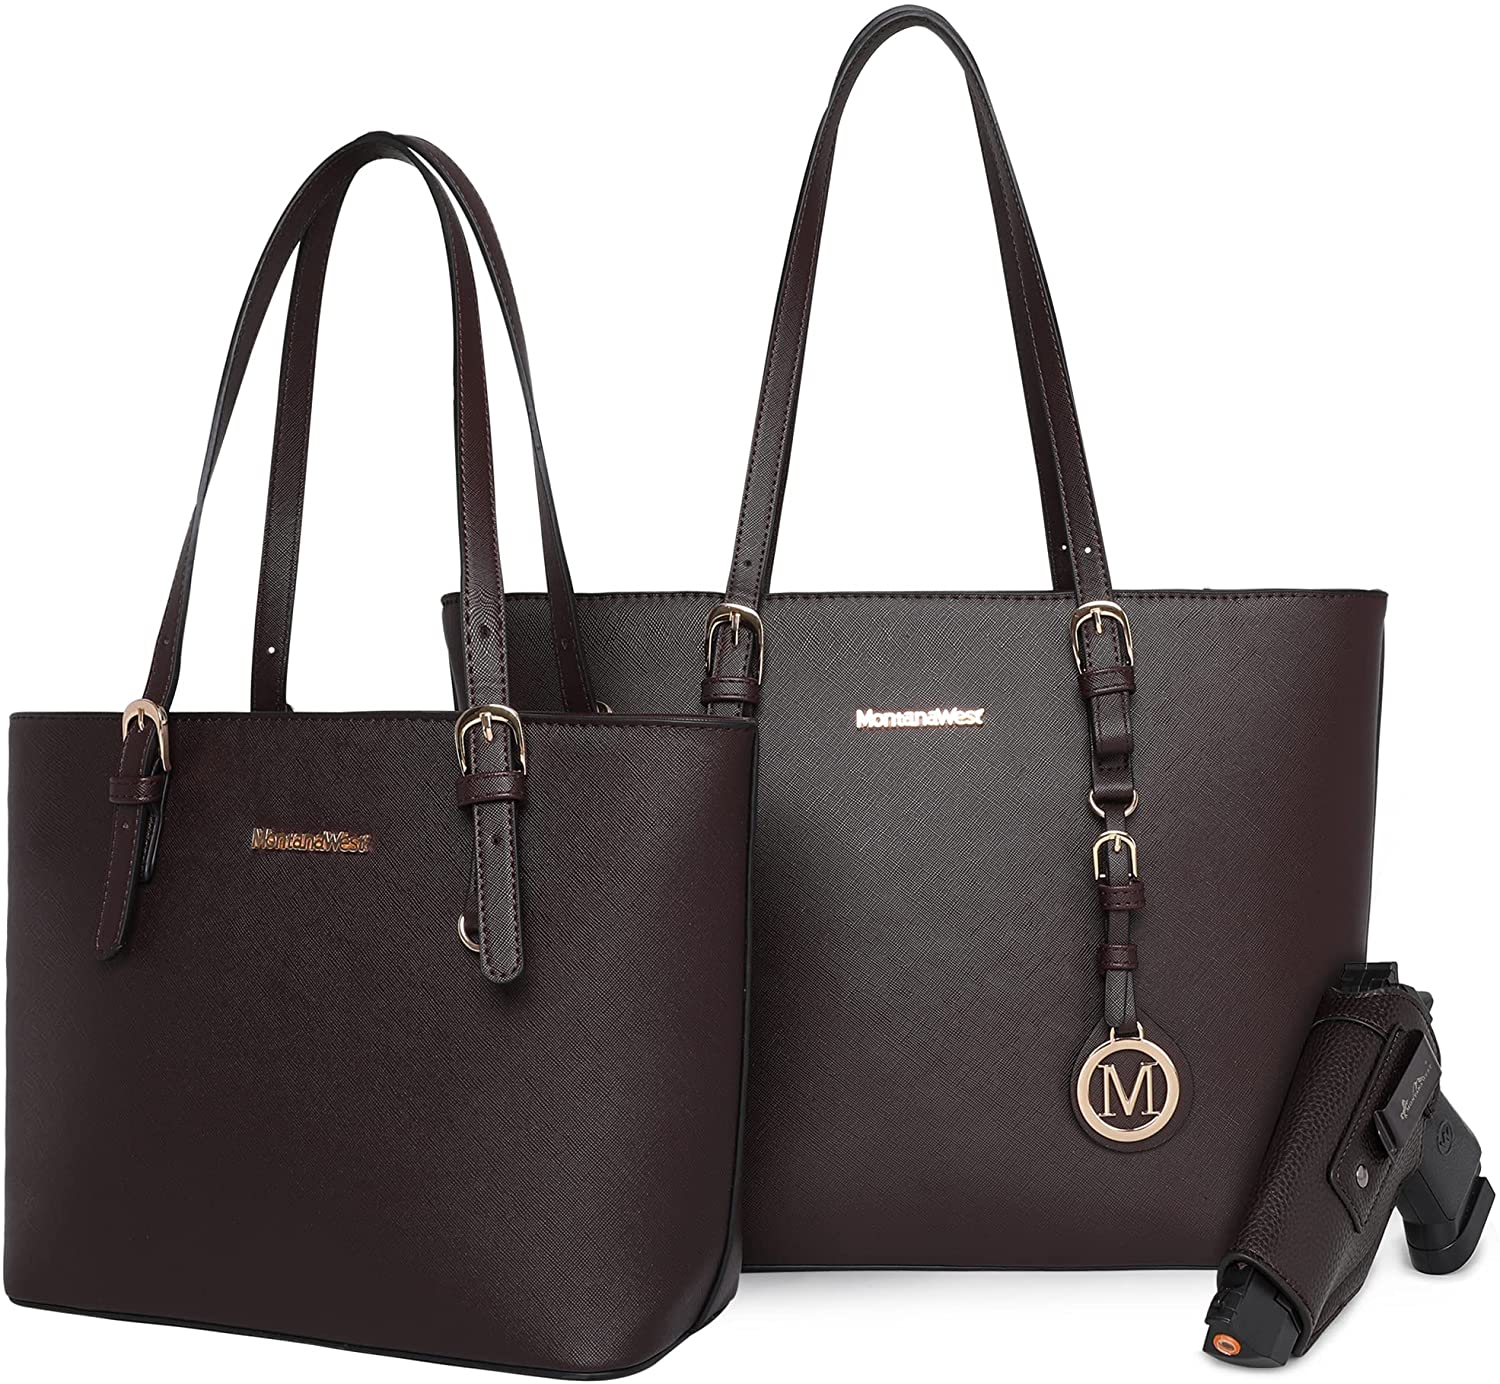 Ladies Leather Large Shoulder Bag by Mala; Burchell Collection Handbag |  eBay